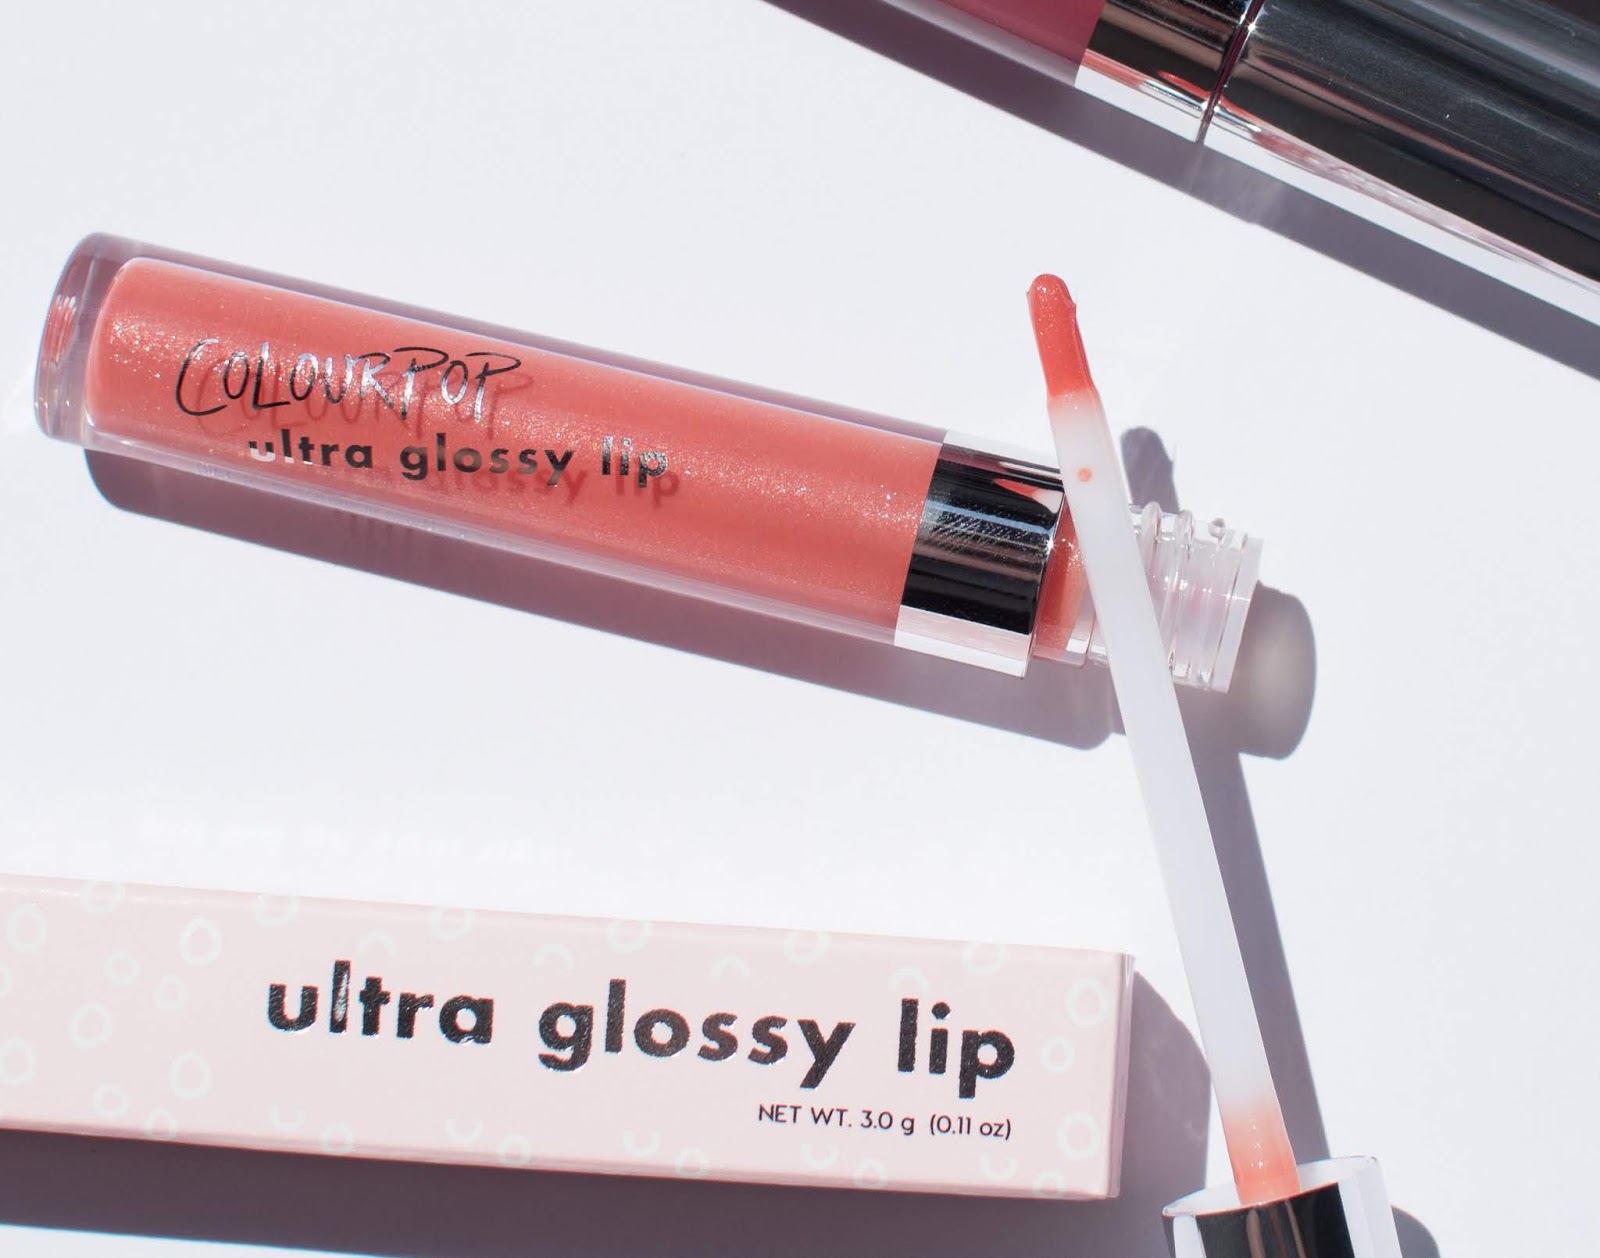 Colourpop Hi Shine Ultra Glossy Lips Brush